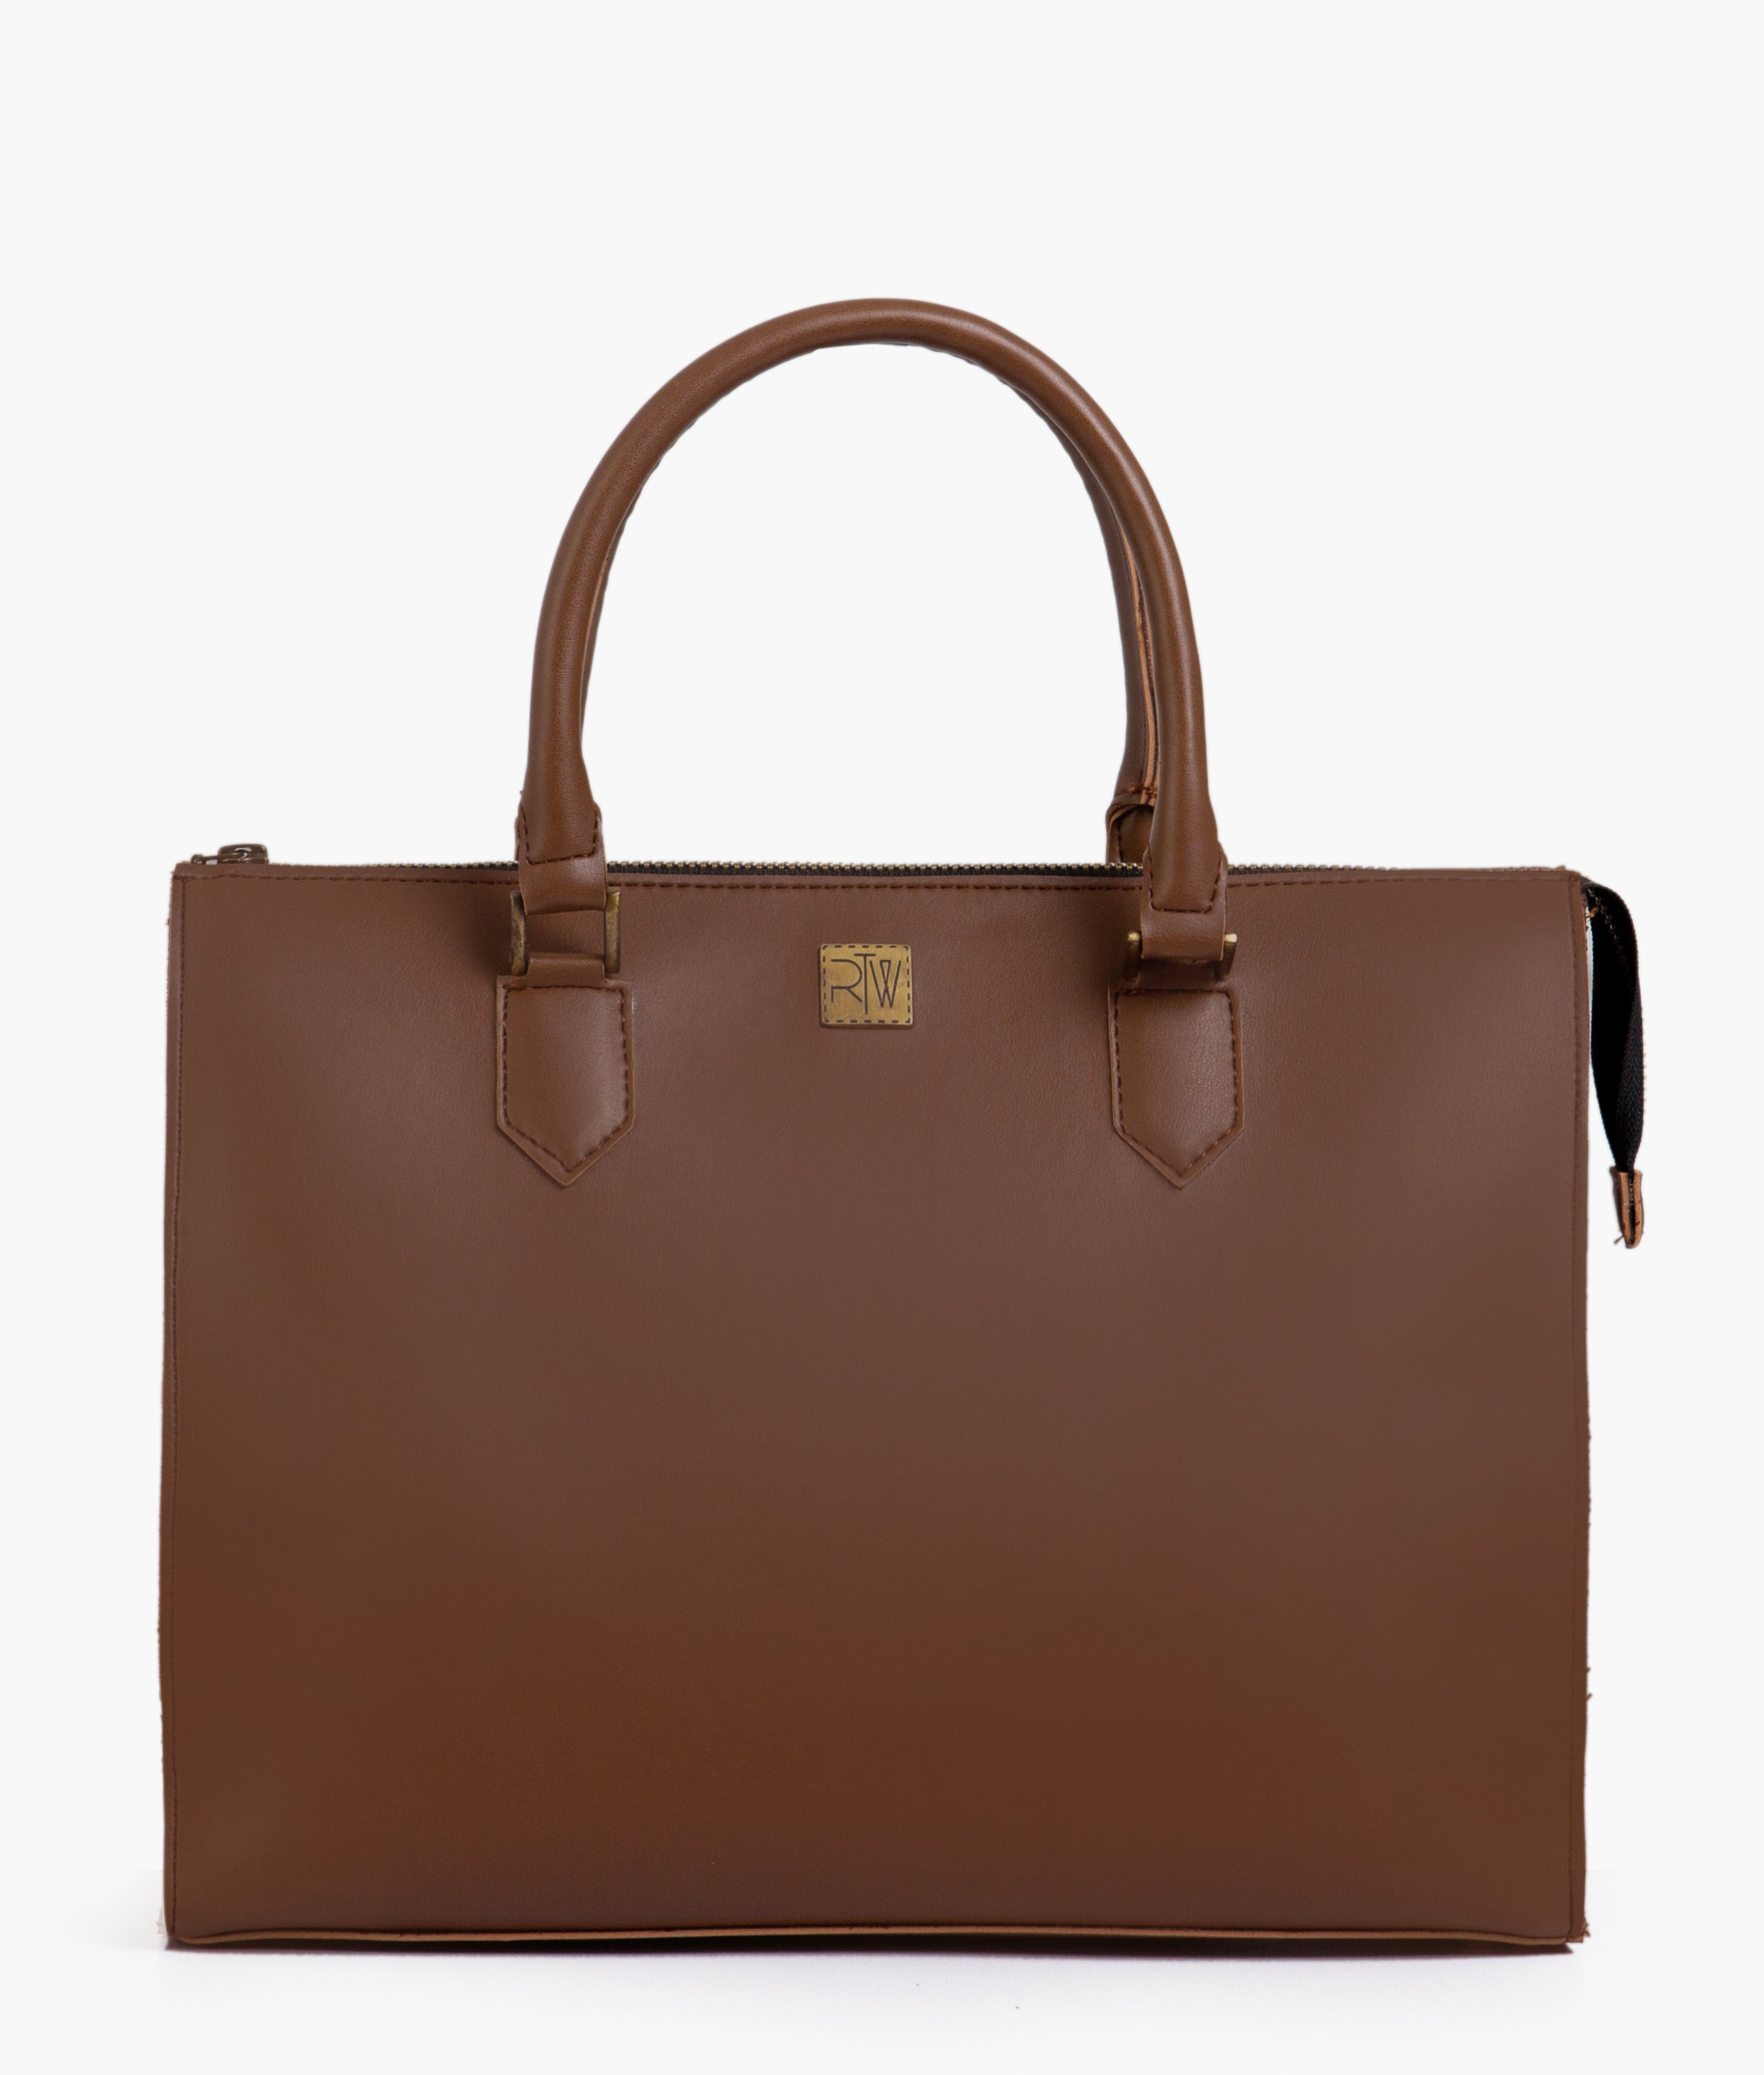 Brown workplace handbag